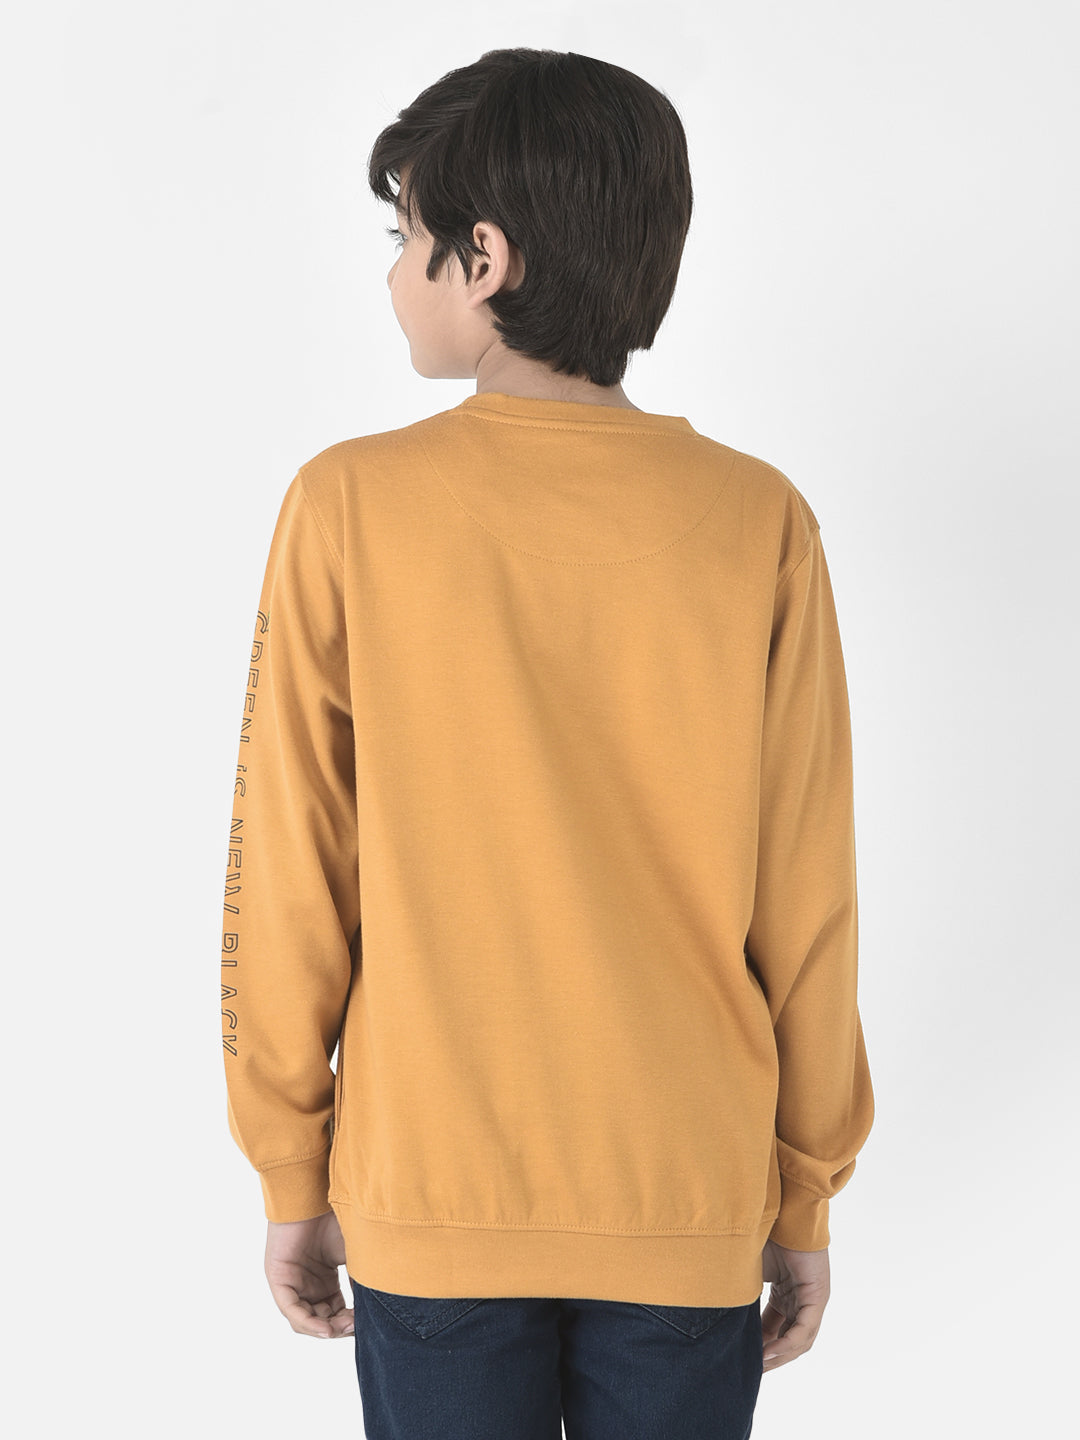  Mustard Generation Planet Sweatshirt\